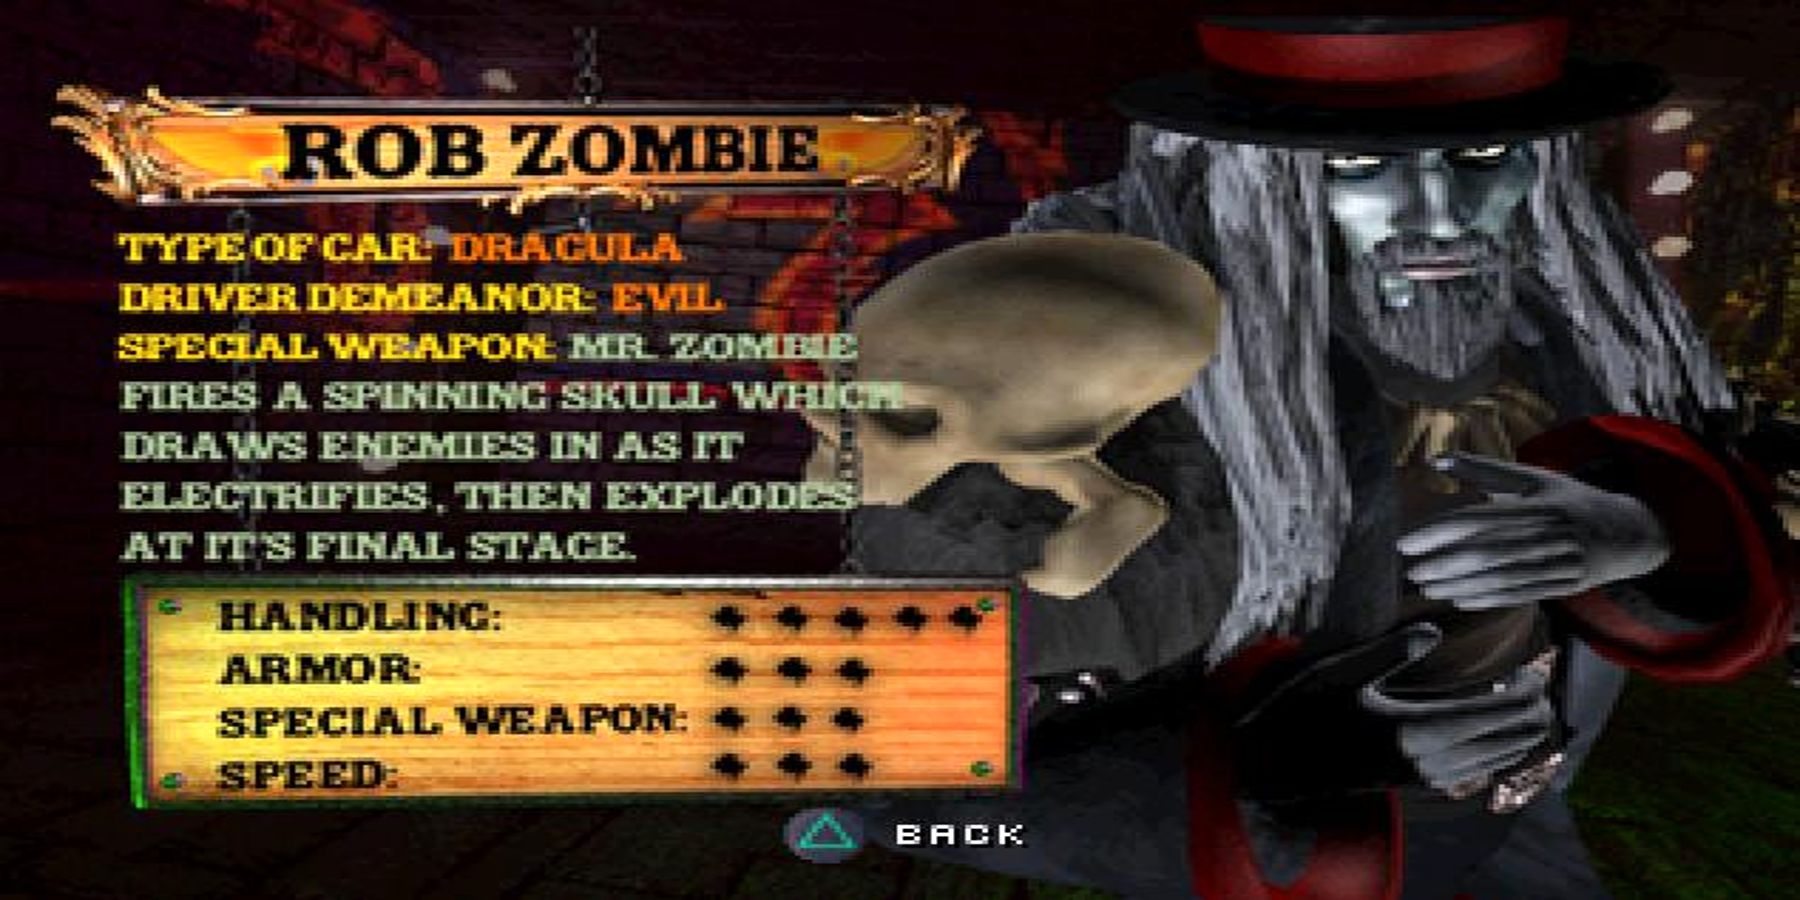 Video Oyunları ile Rob Zombie’nin Tarihi